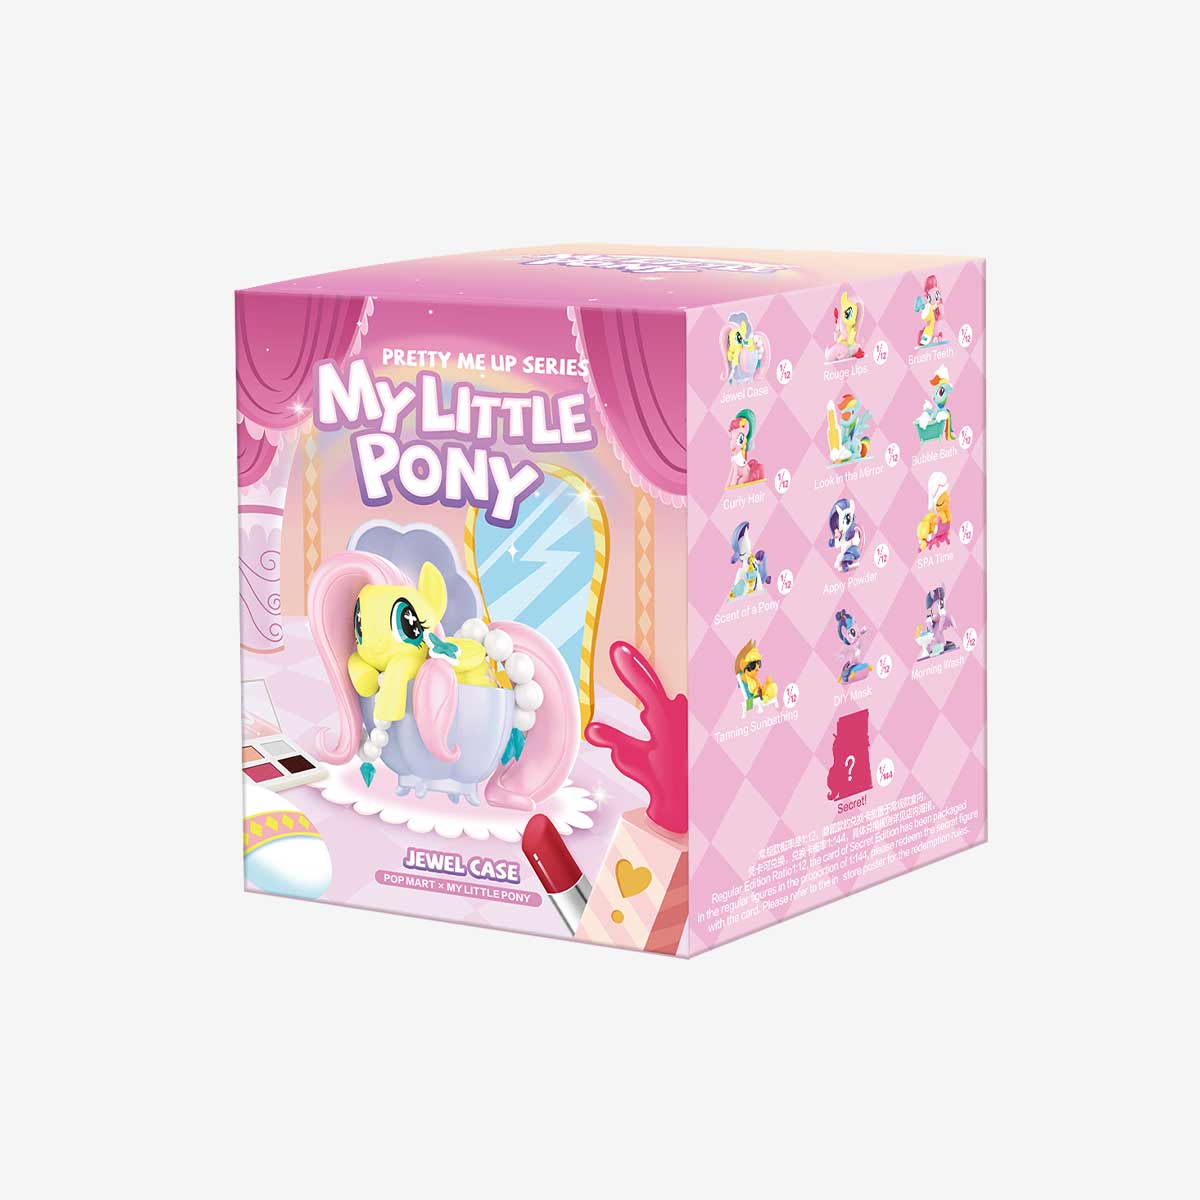 【Restock】Pop Mart My Little Pony Pretty Me Up Series Blind Box Figure